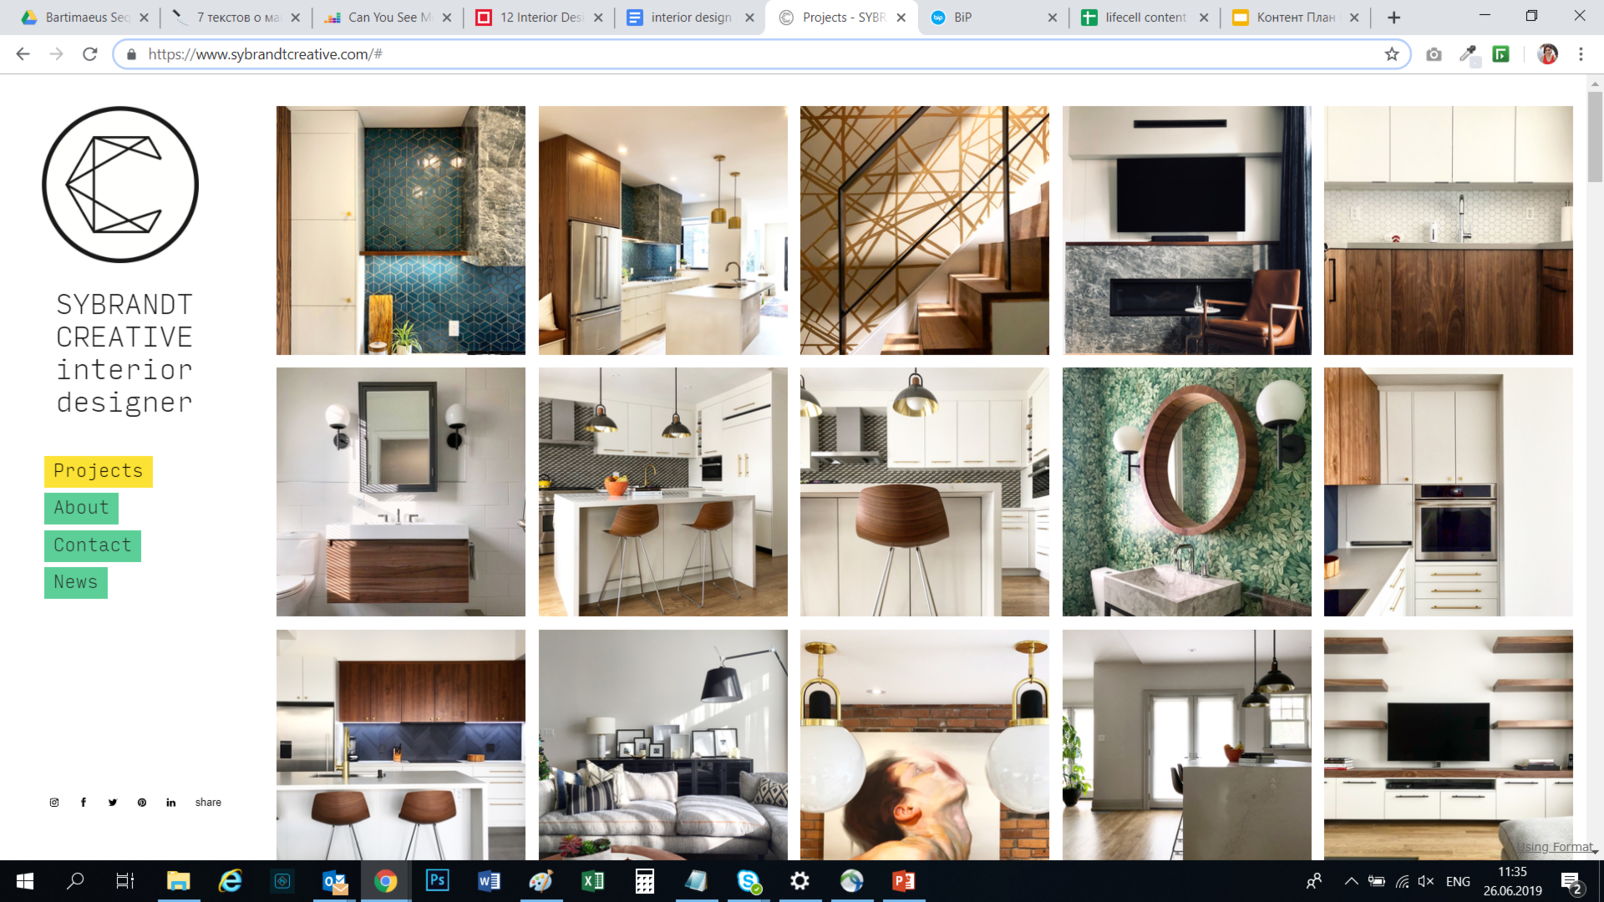 Sybrandt Creative interior designer website - weblium